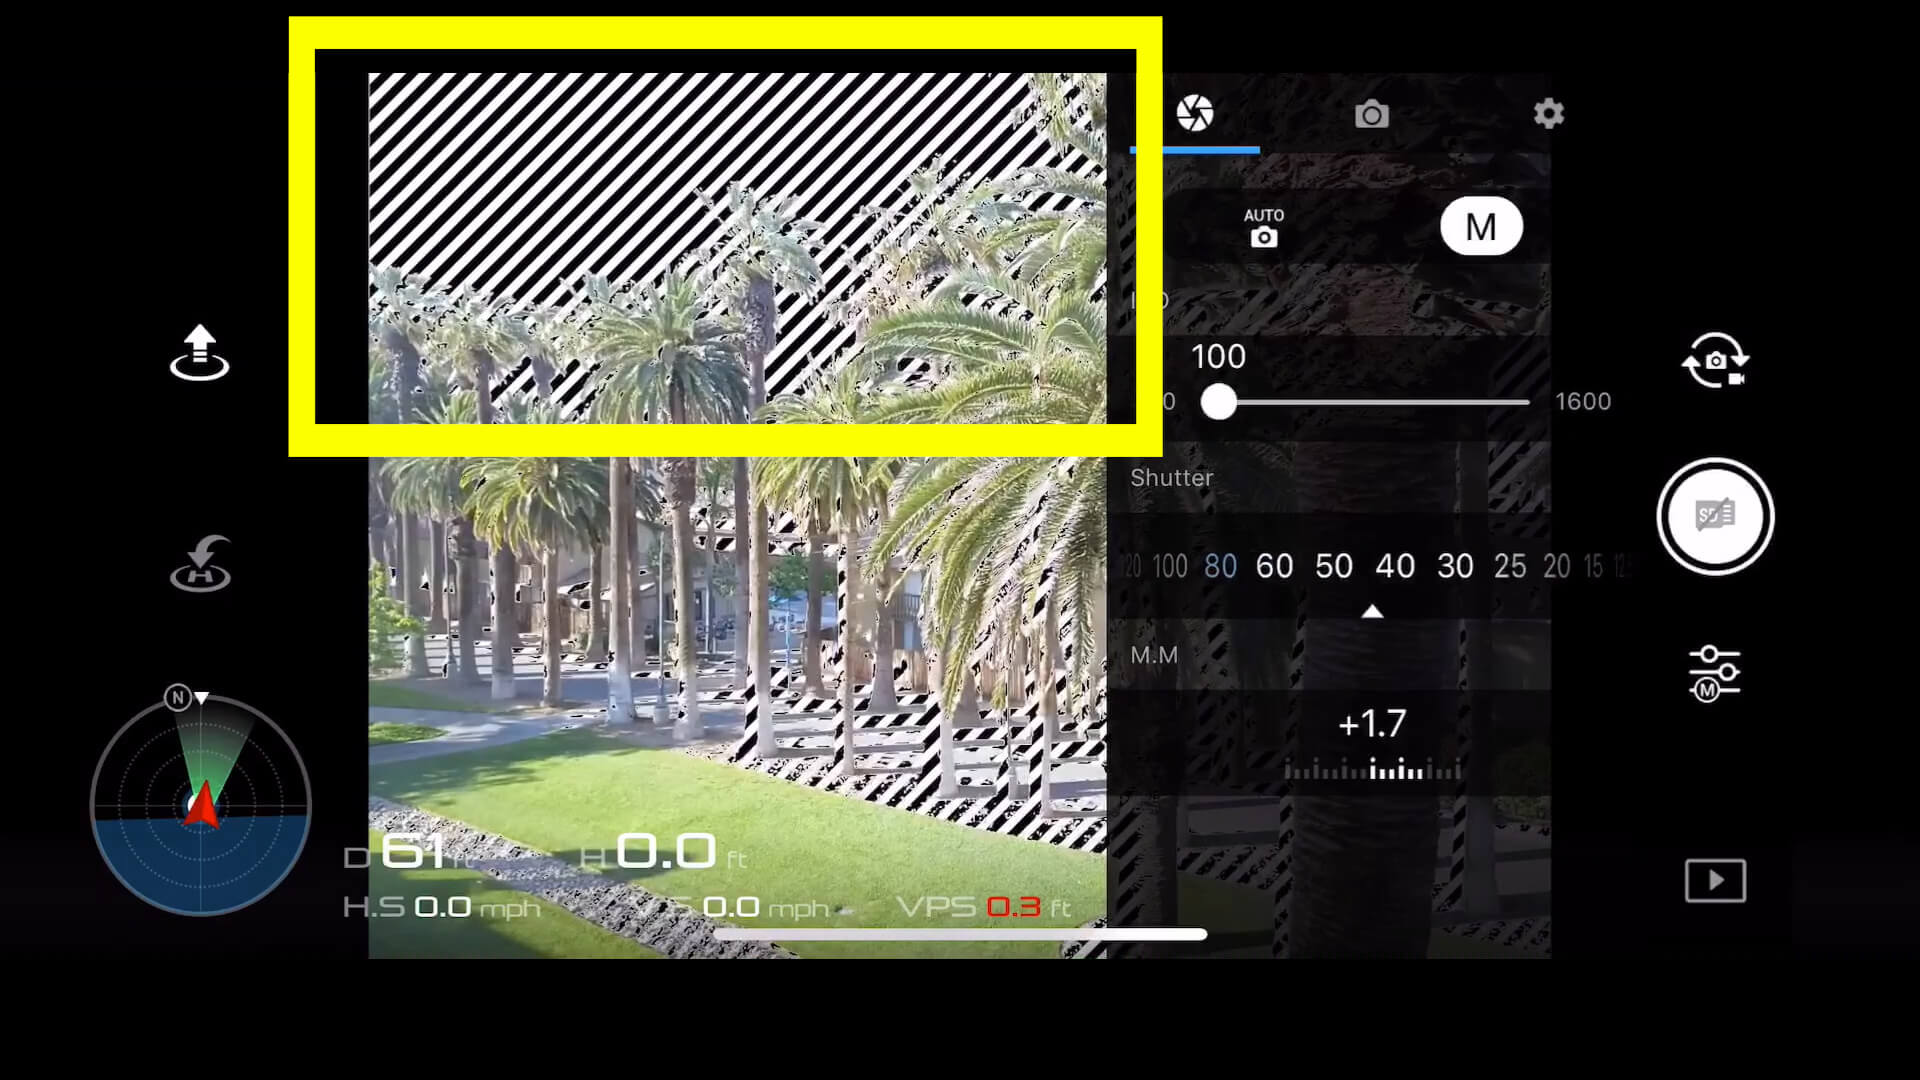 10 basic camera settings for dji drone photos - overexposure